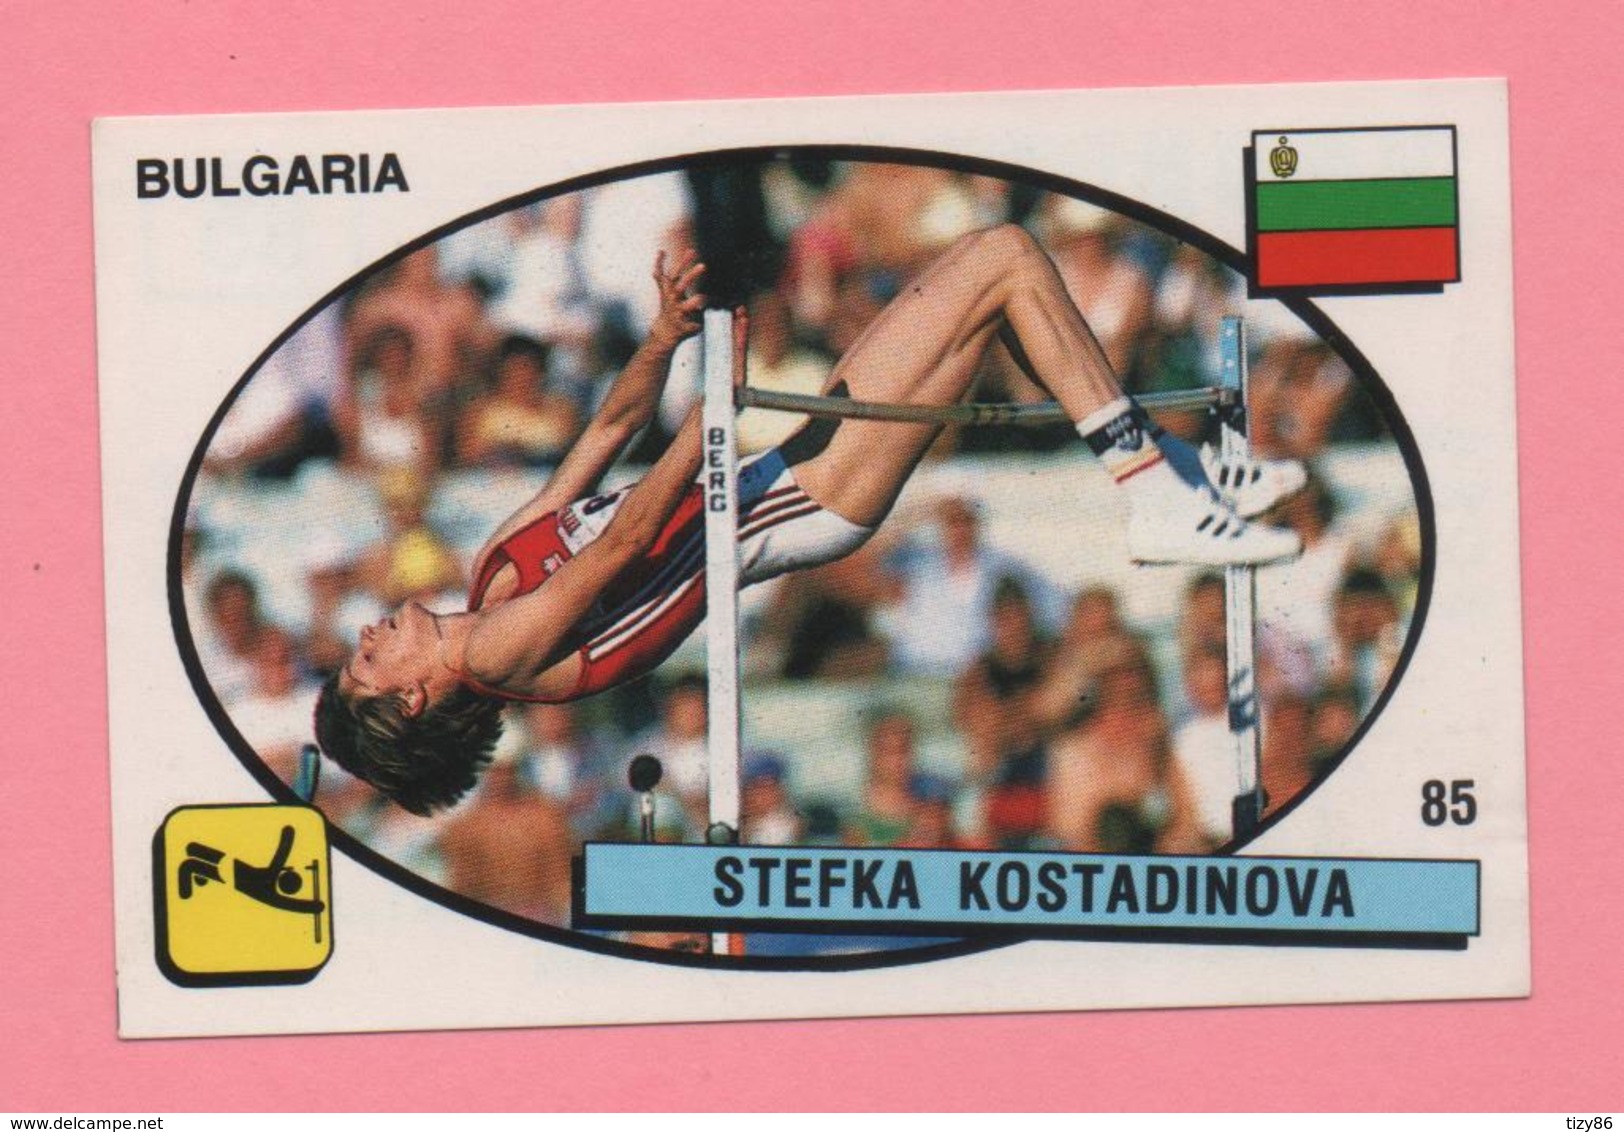 Figurina Panini 1988 N° 85 - Stefka Kostadinova, Bulgaria - Atletica